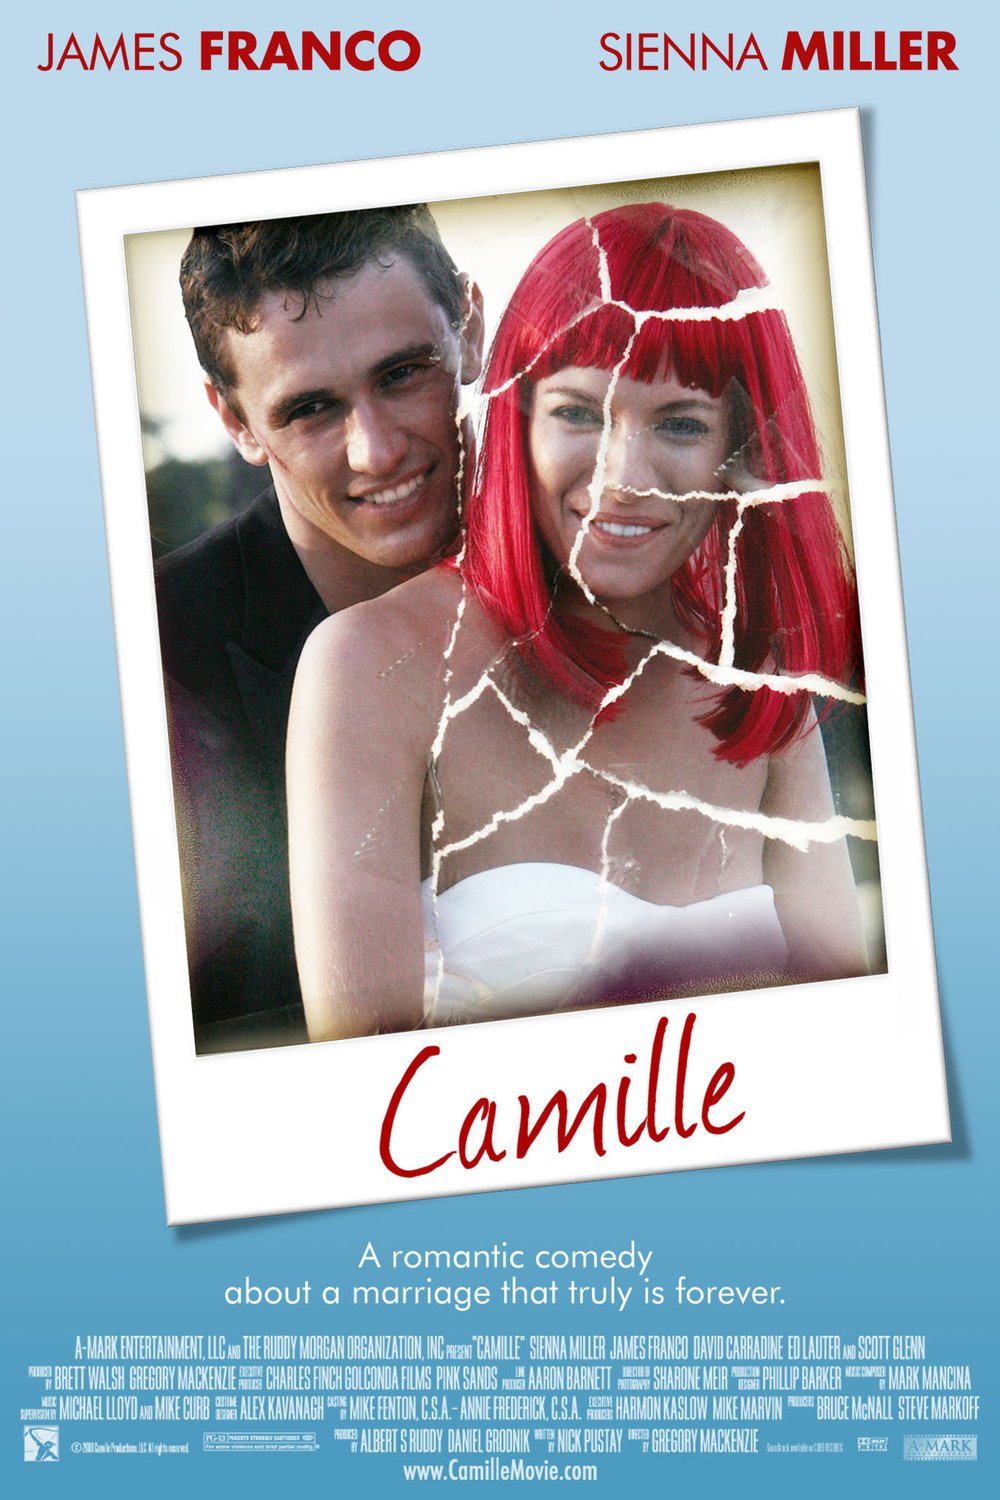 L'affiche du film Camille